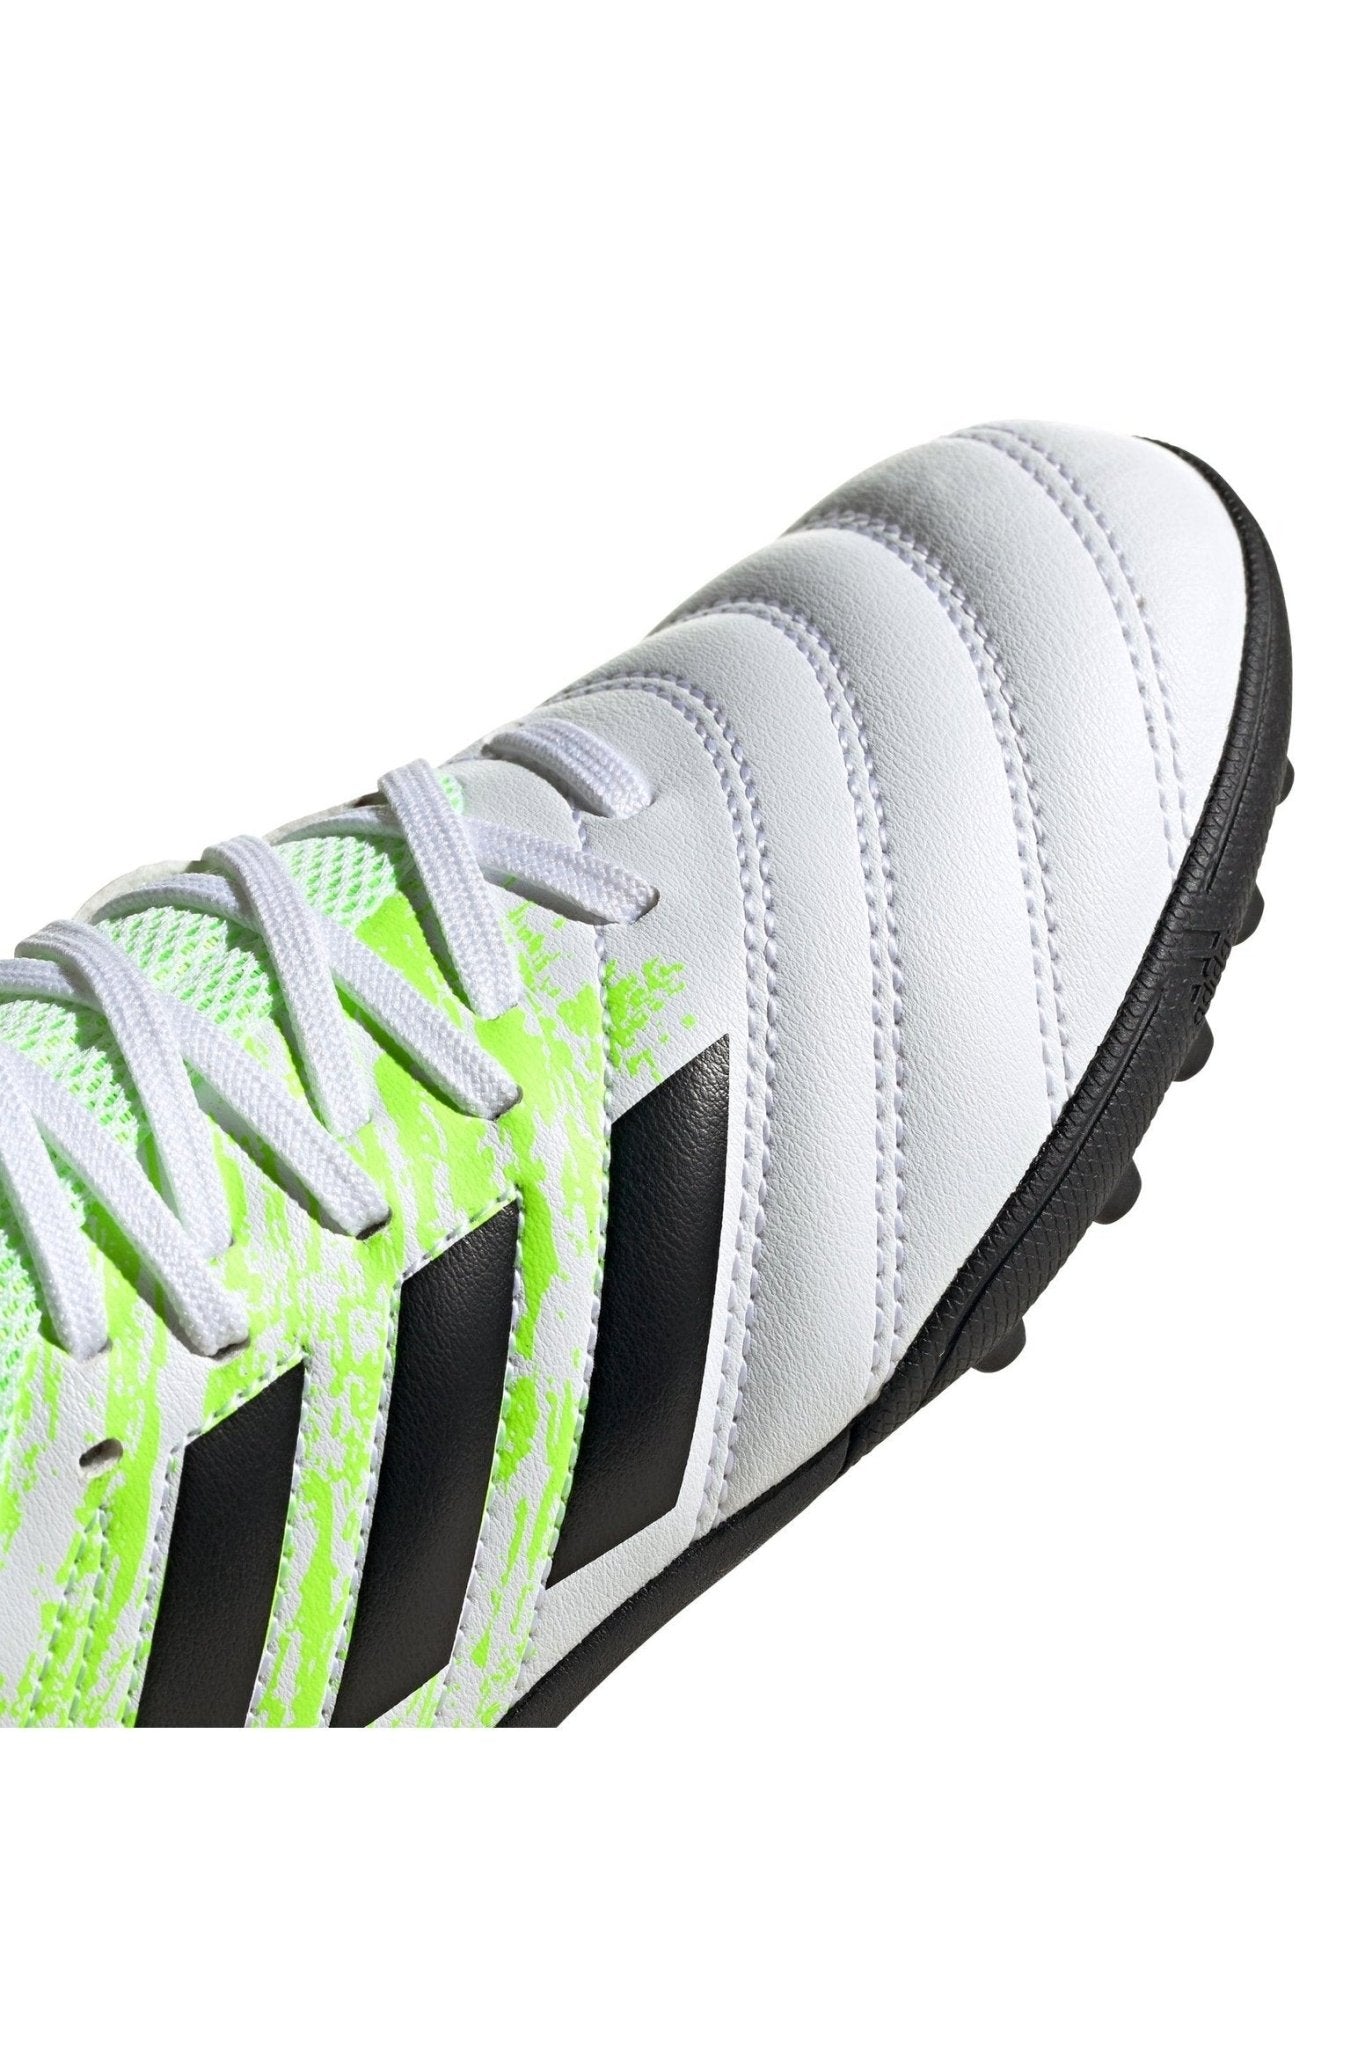 ADIDAS - COPA נעלי כדורגל לבן-ירוק - MASHBIR//365